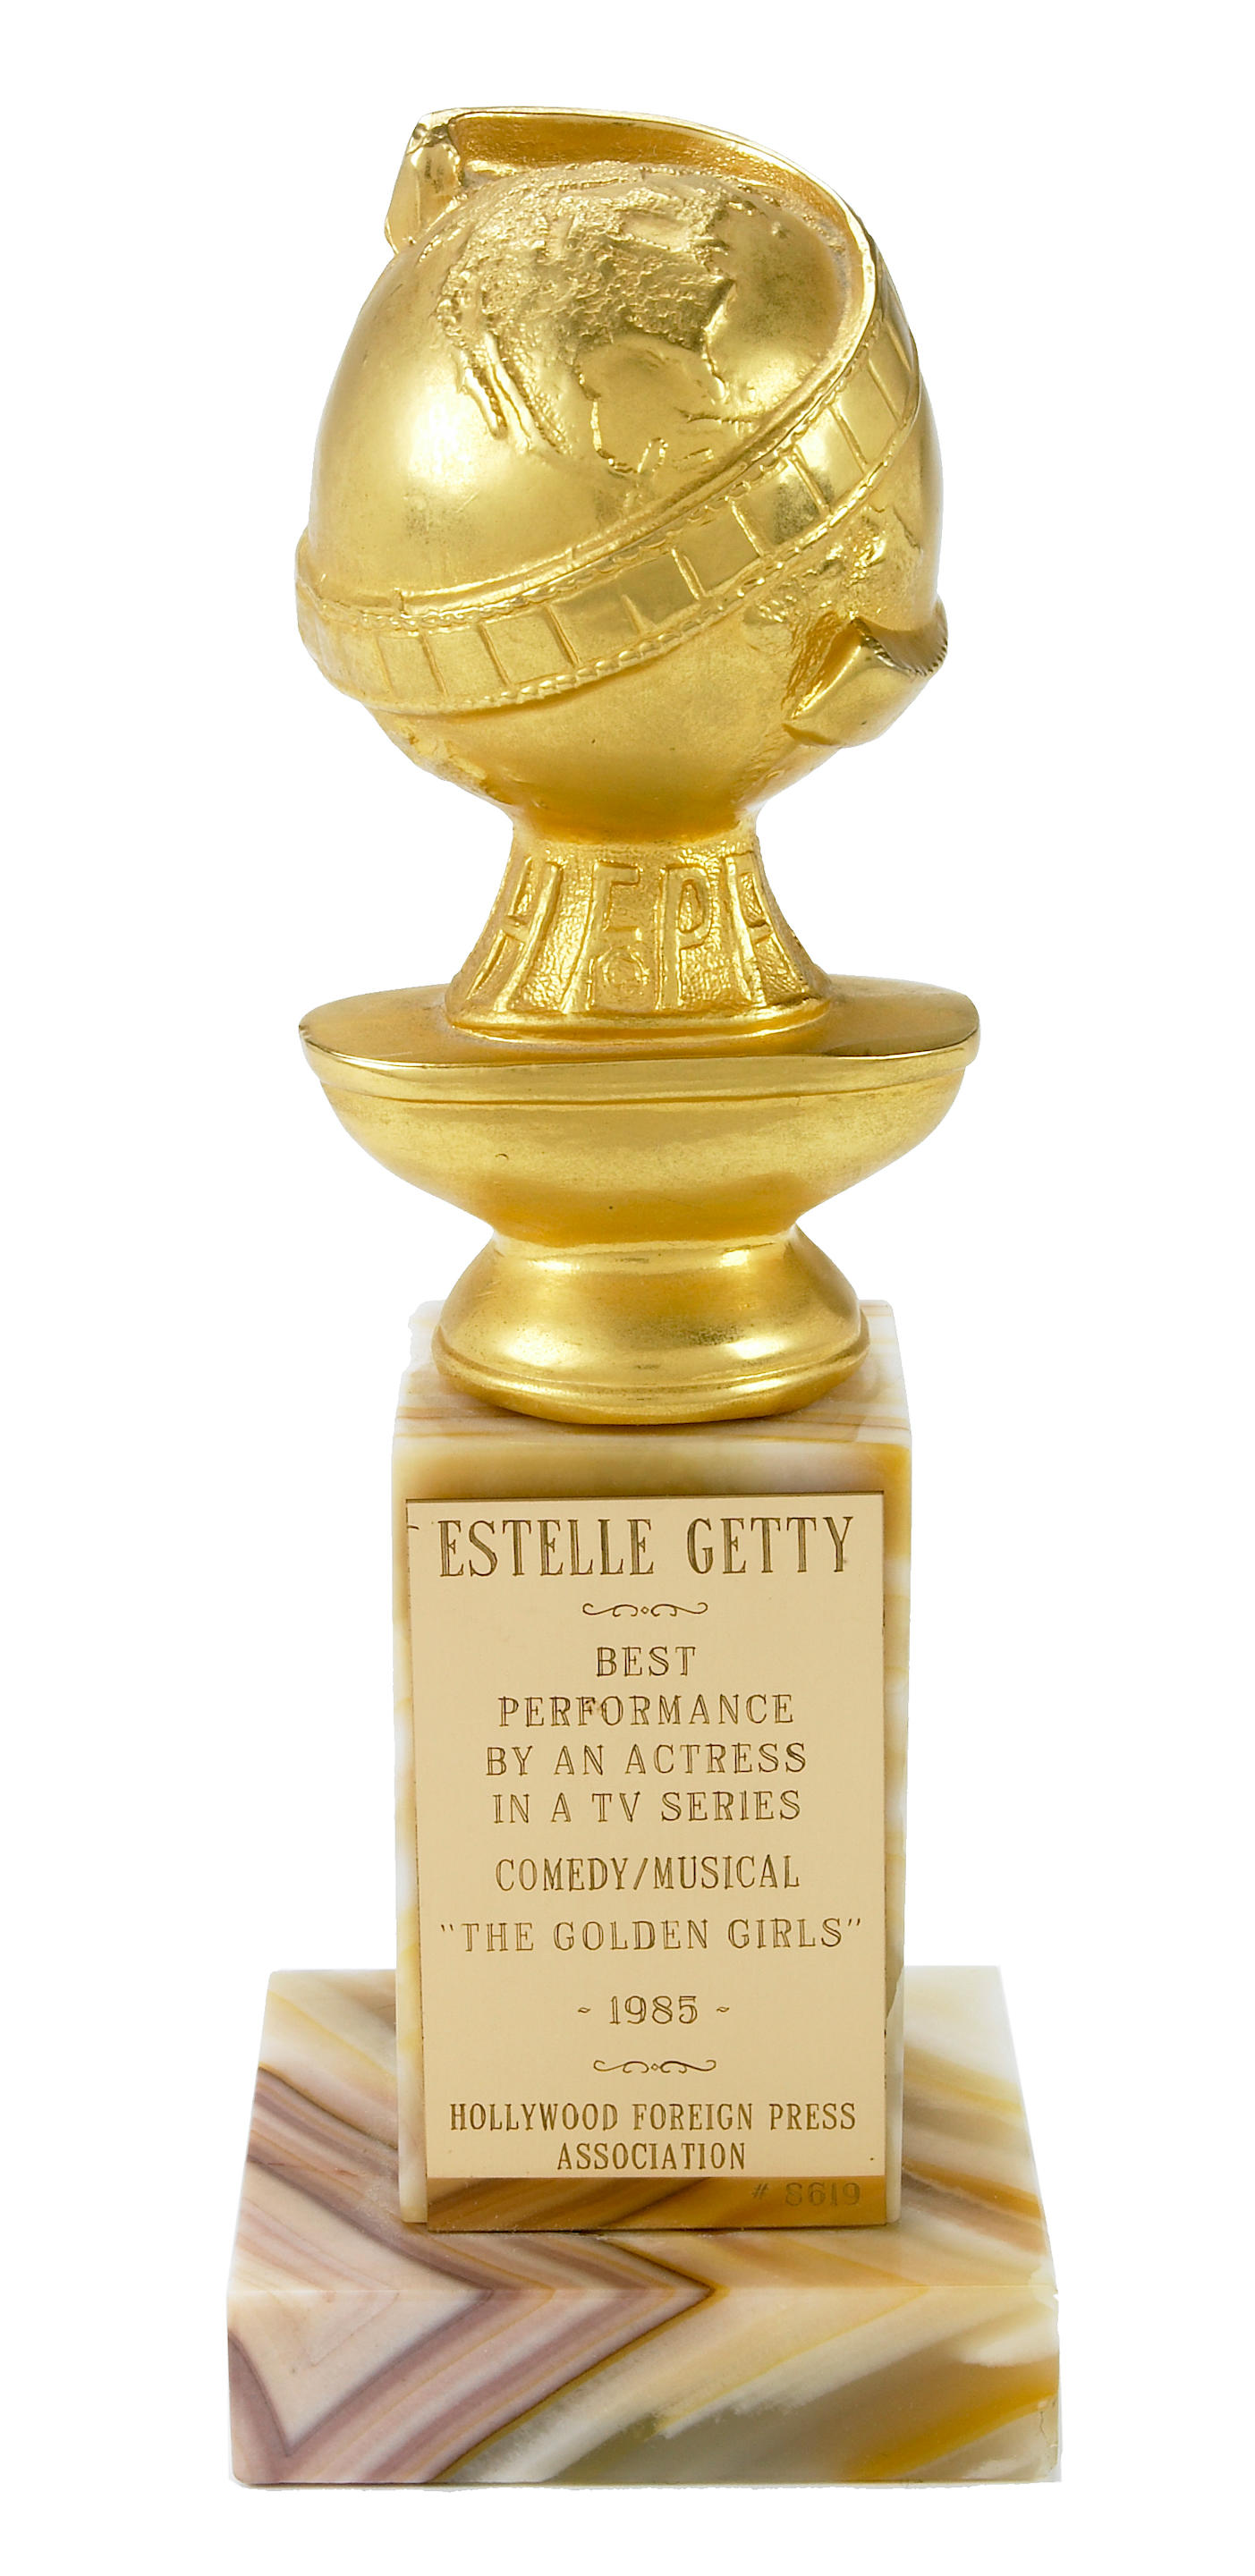 An Estelle Getty Golden Globe Award for 